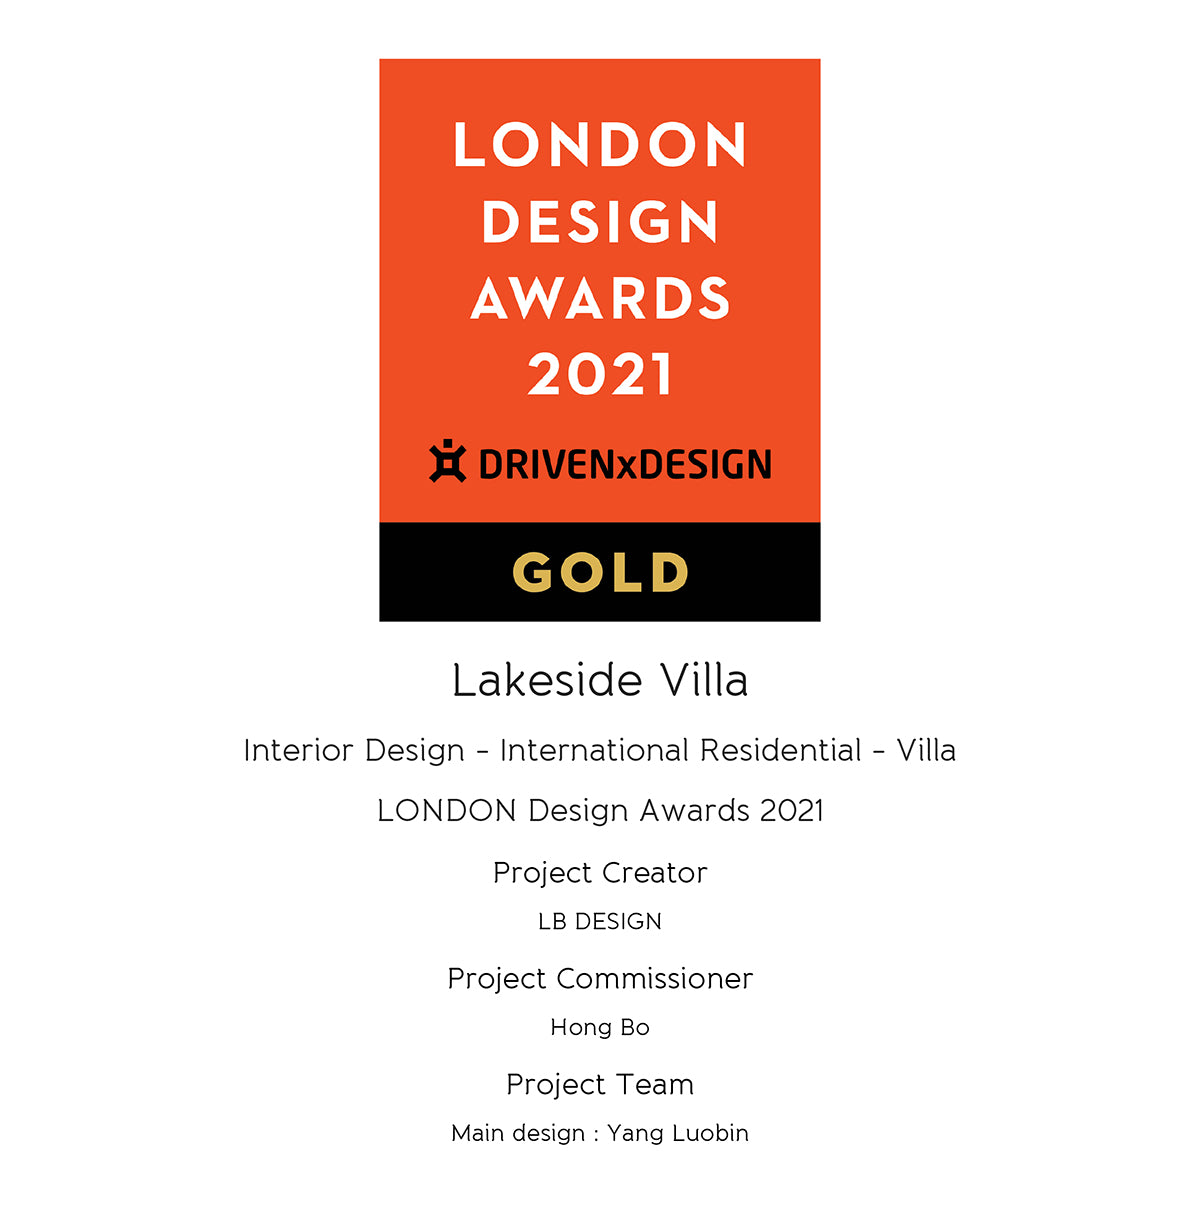 London design awards 2021